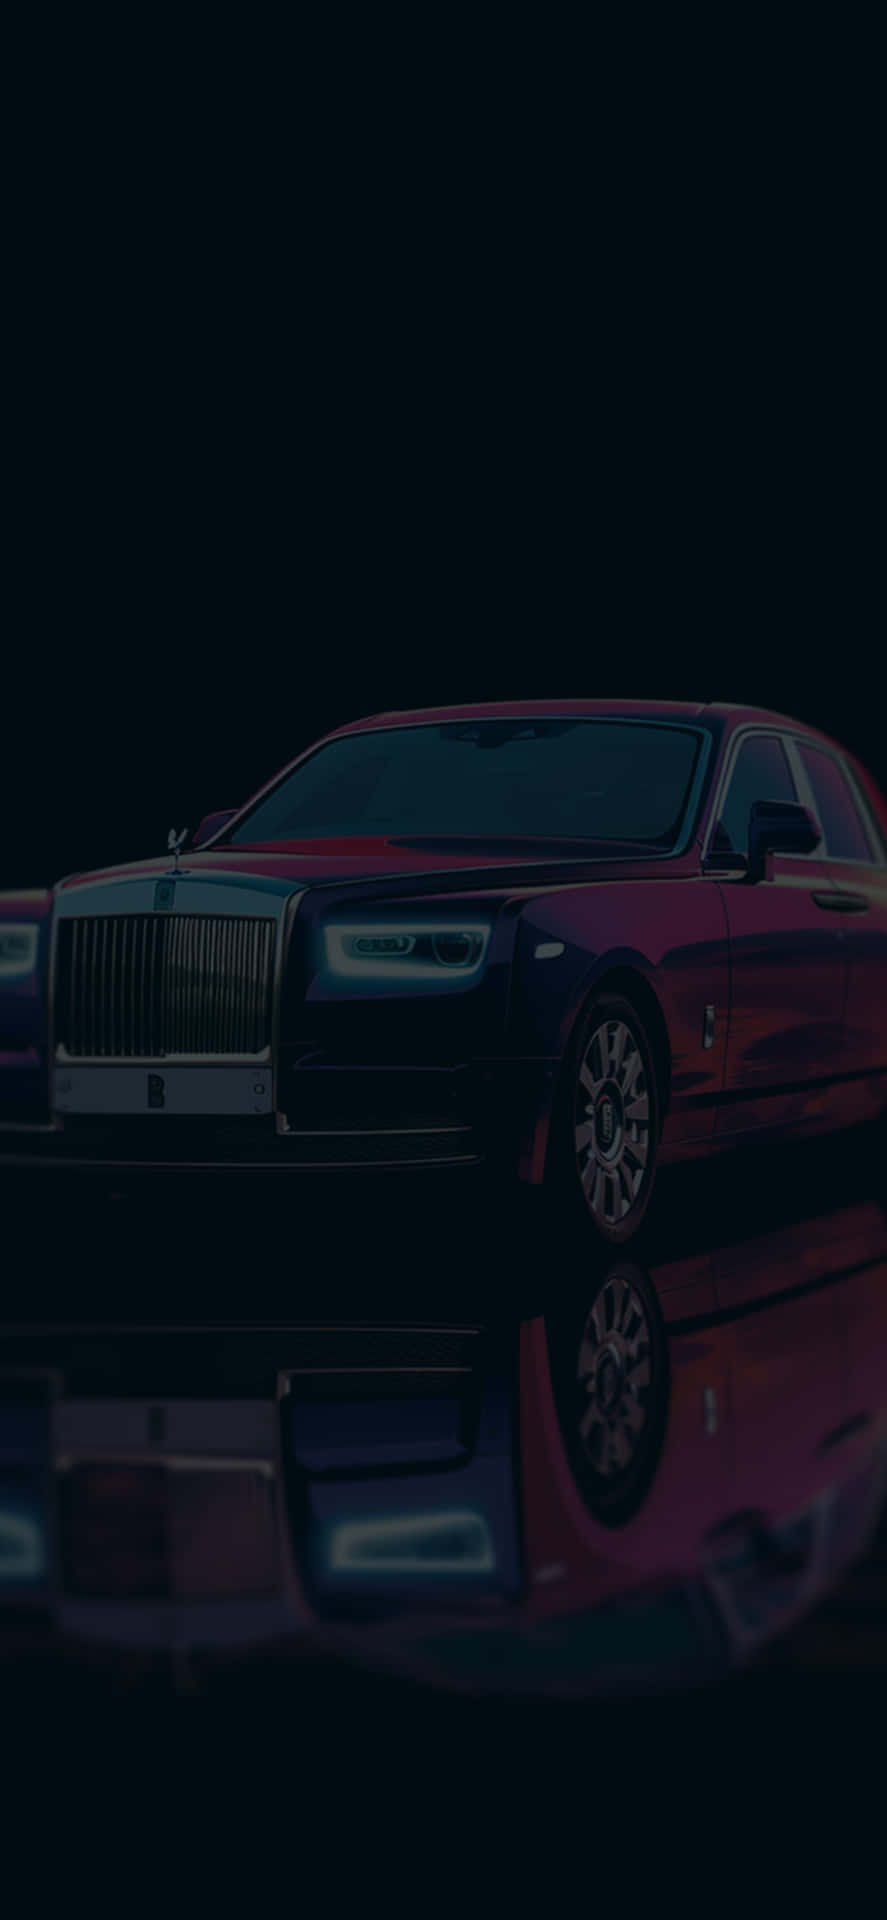 Caption: Luxury In Motion - Rolls Royce Phantom